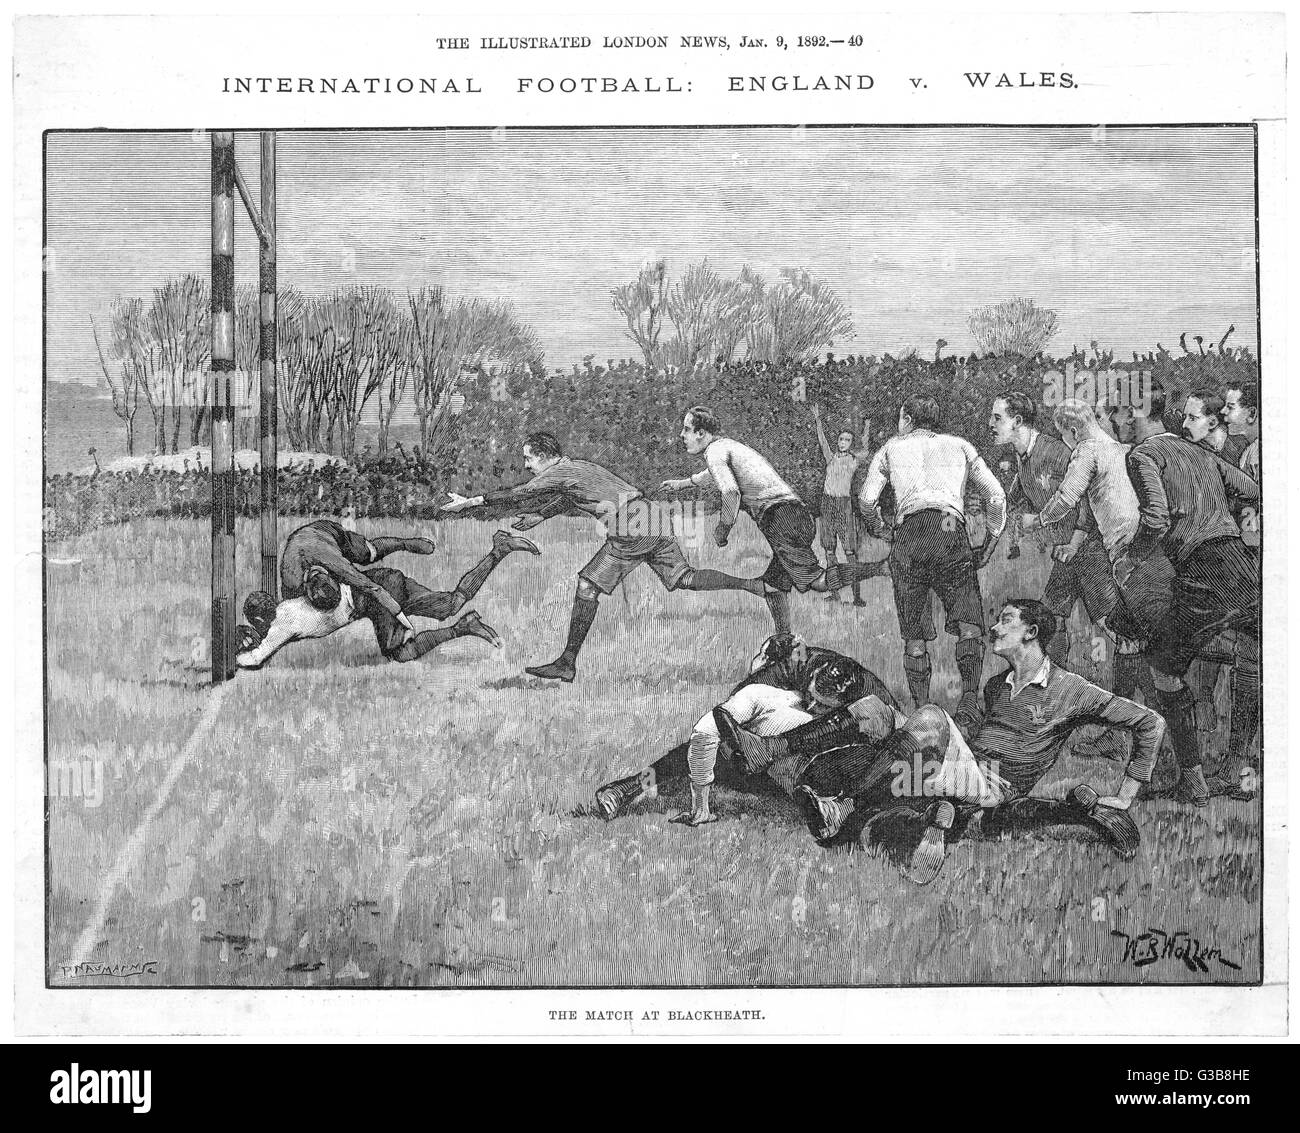 England besiegen Wales am Blackheath mit 17: 0.         Datum: 2. Januar 1892 Stockfoto